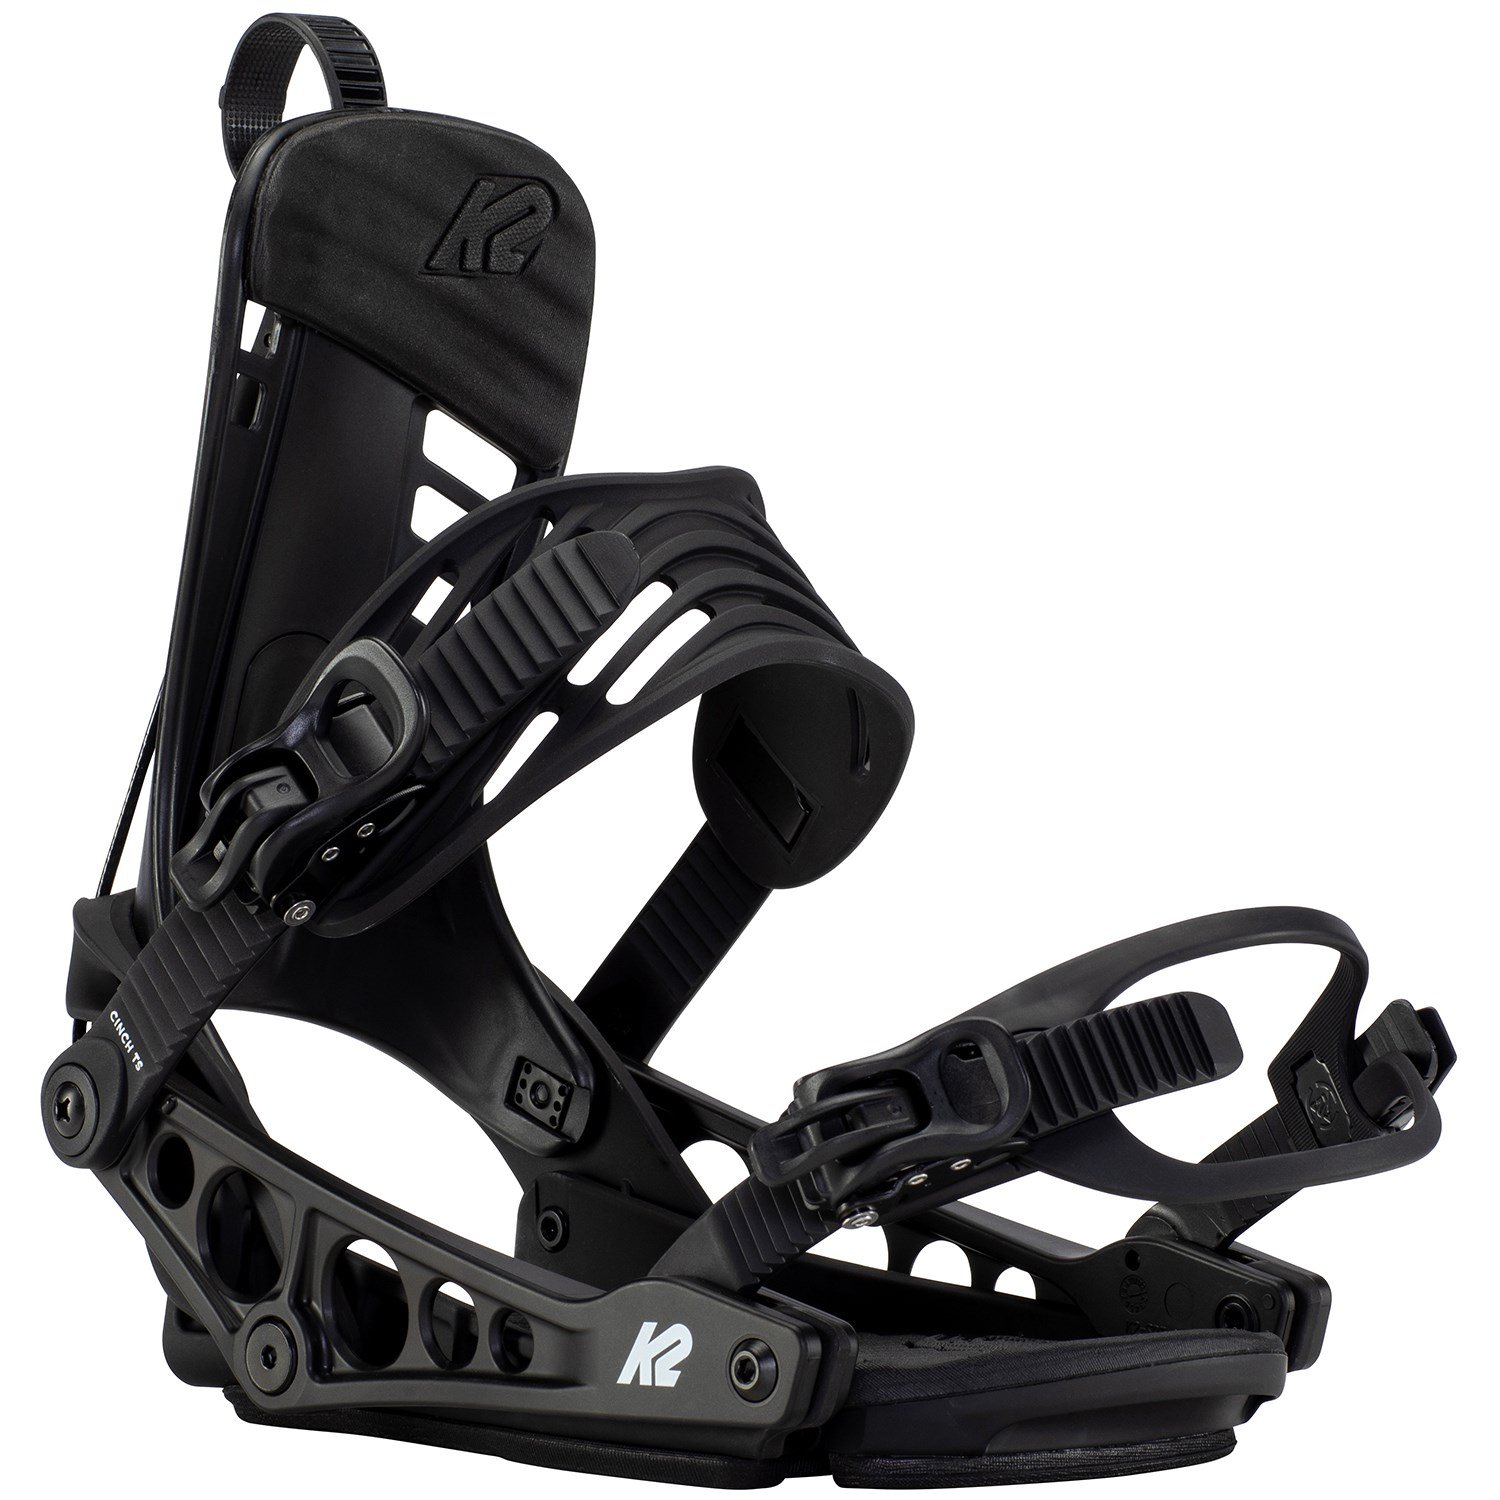 K2 Snowboard Bindings Cinch Drag Ankle Ratchets Buckles x 2 in Black 